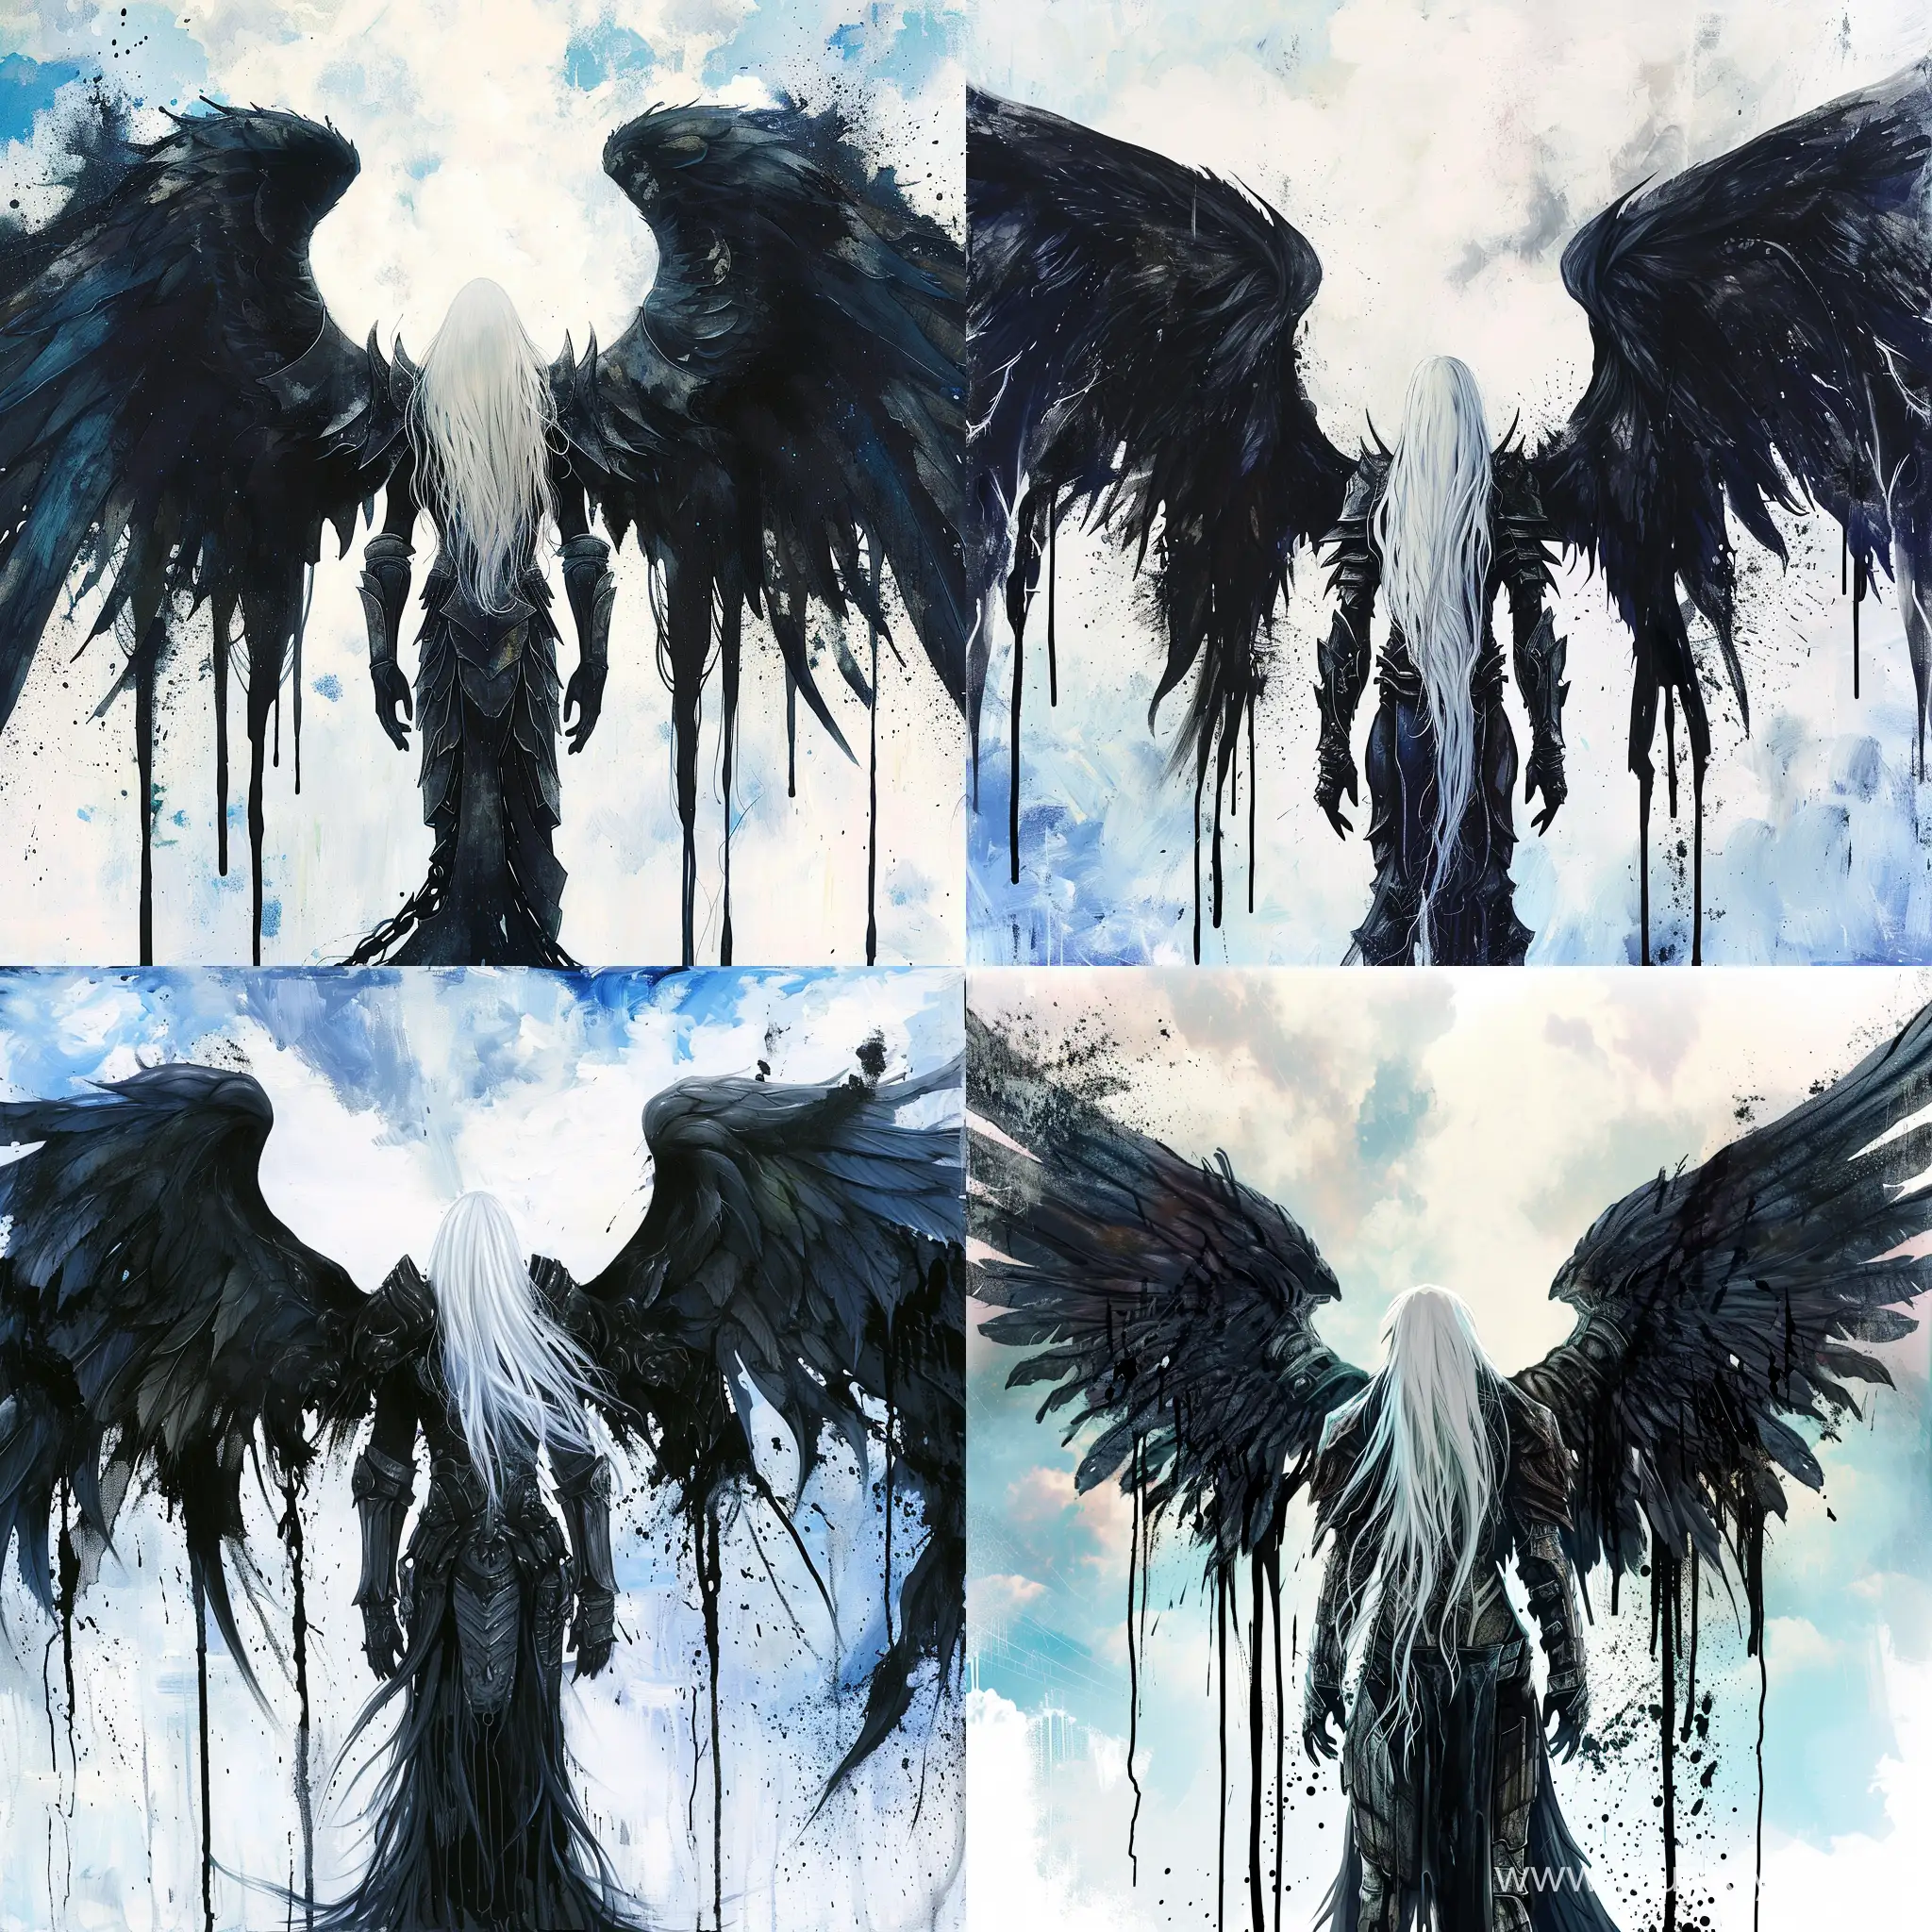 Majestic-Dark-Angel-with-Spread-Wings-in-Night-Sky